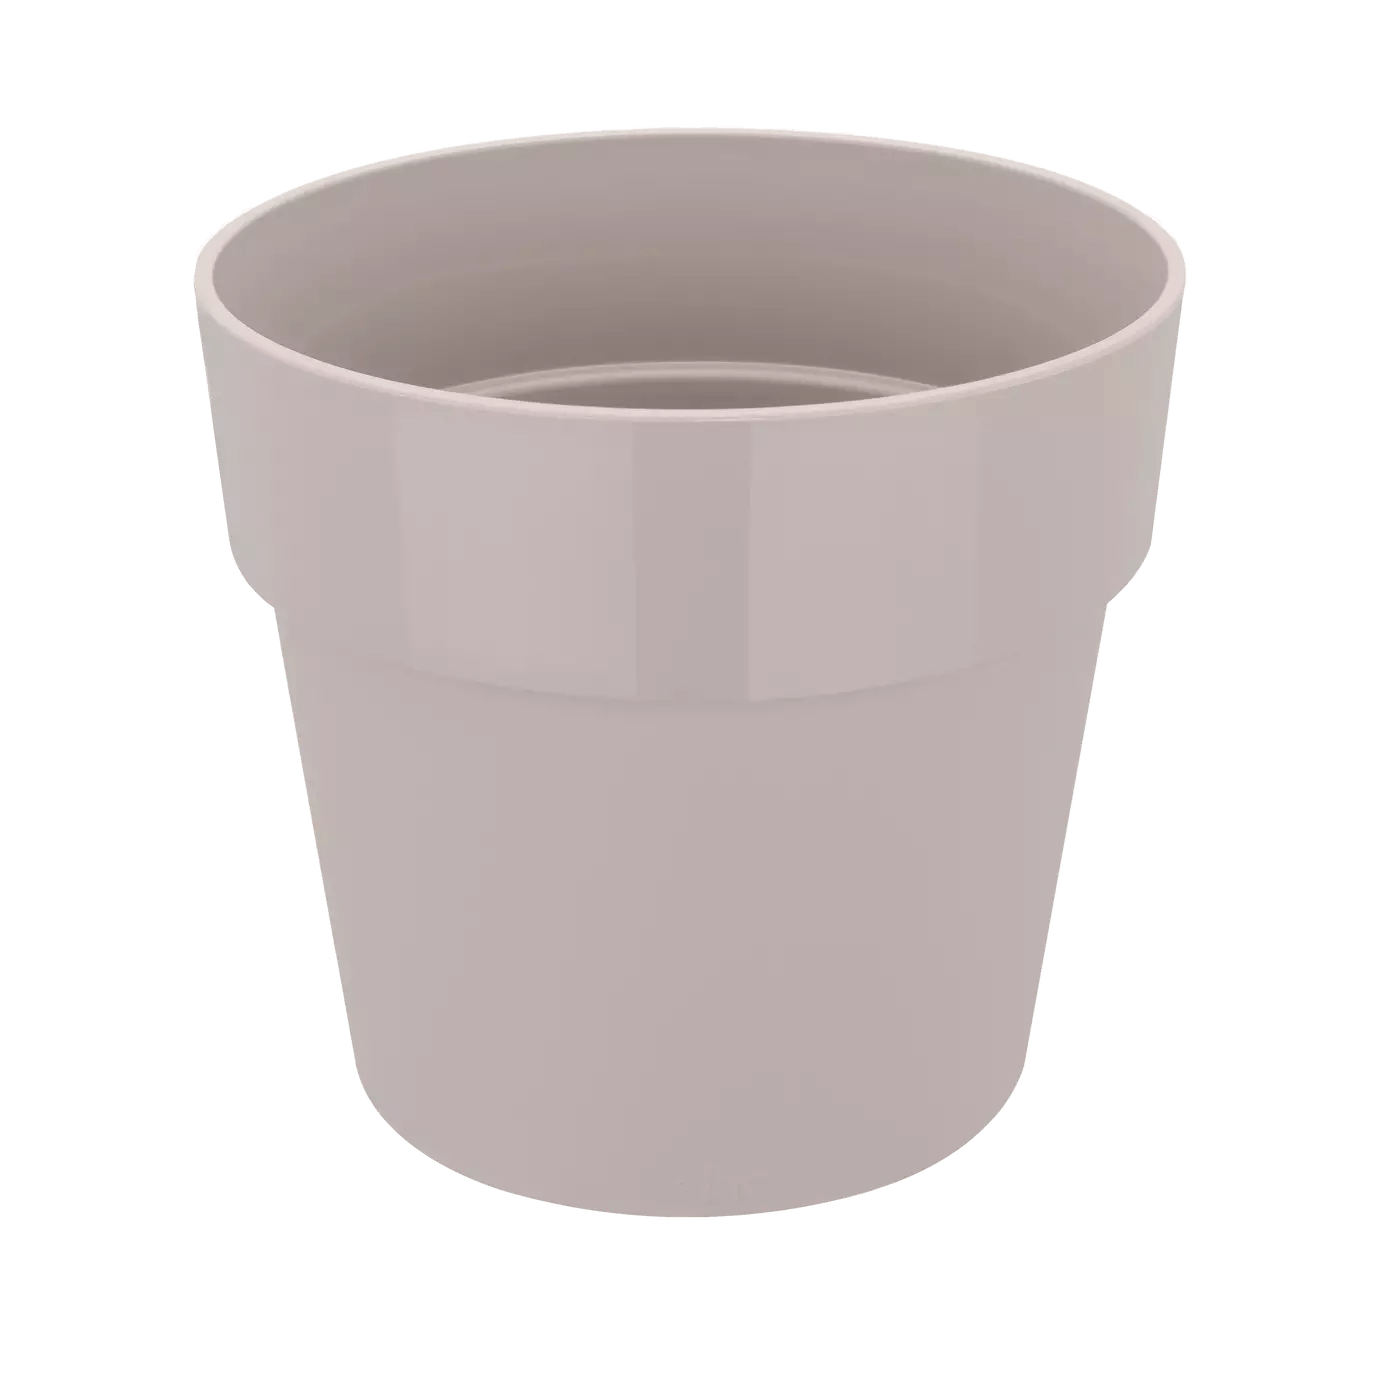 Elho Plant Pot Recycled Plastic Plant Pot - 'b.for original' in Warm Grey